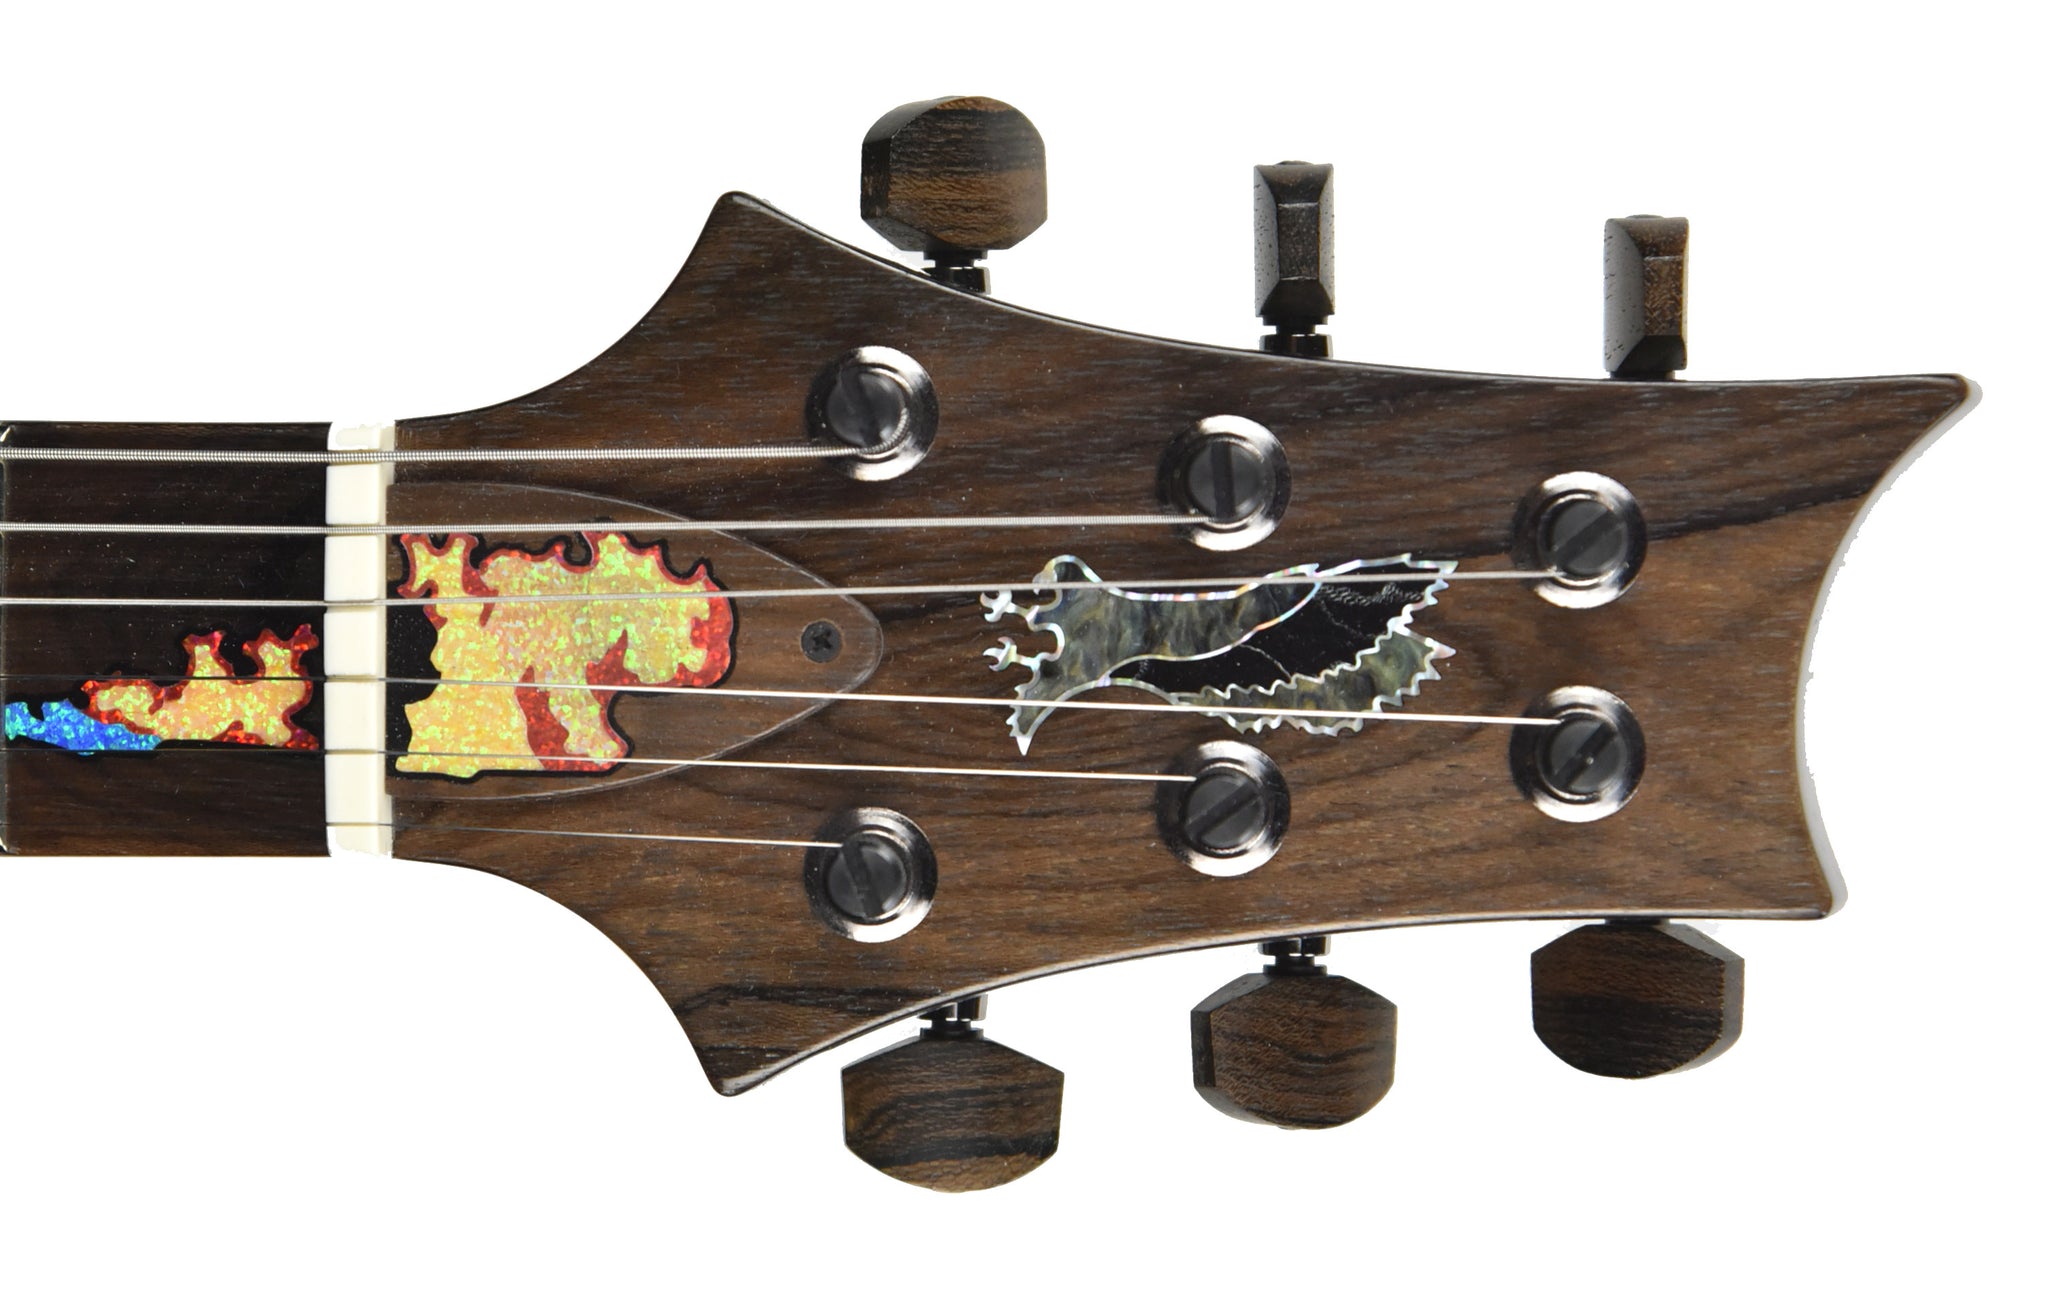 prs dragon inlay guitar